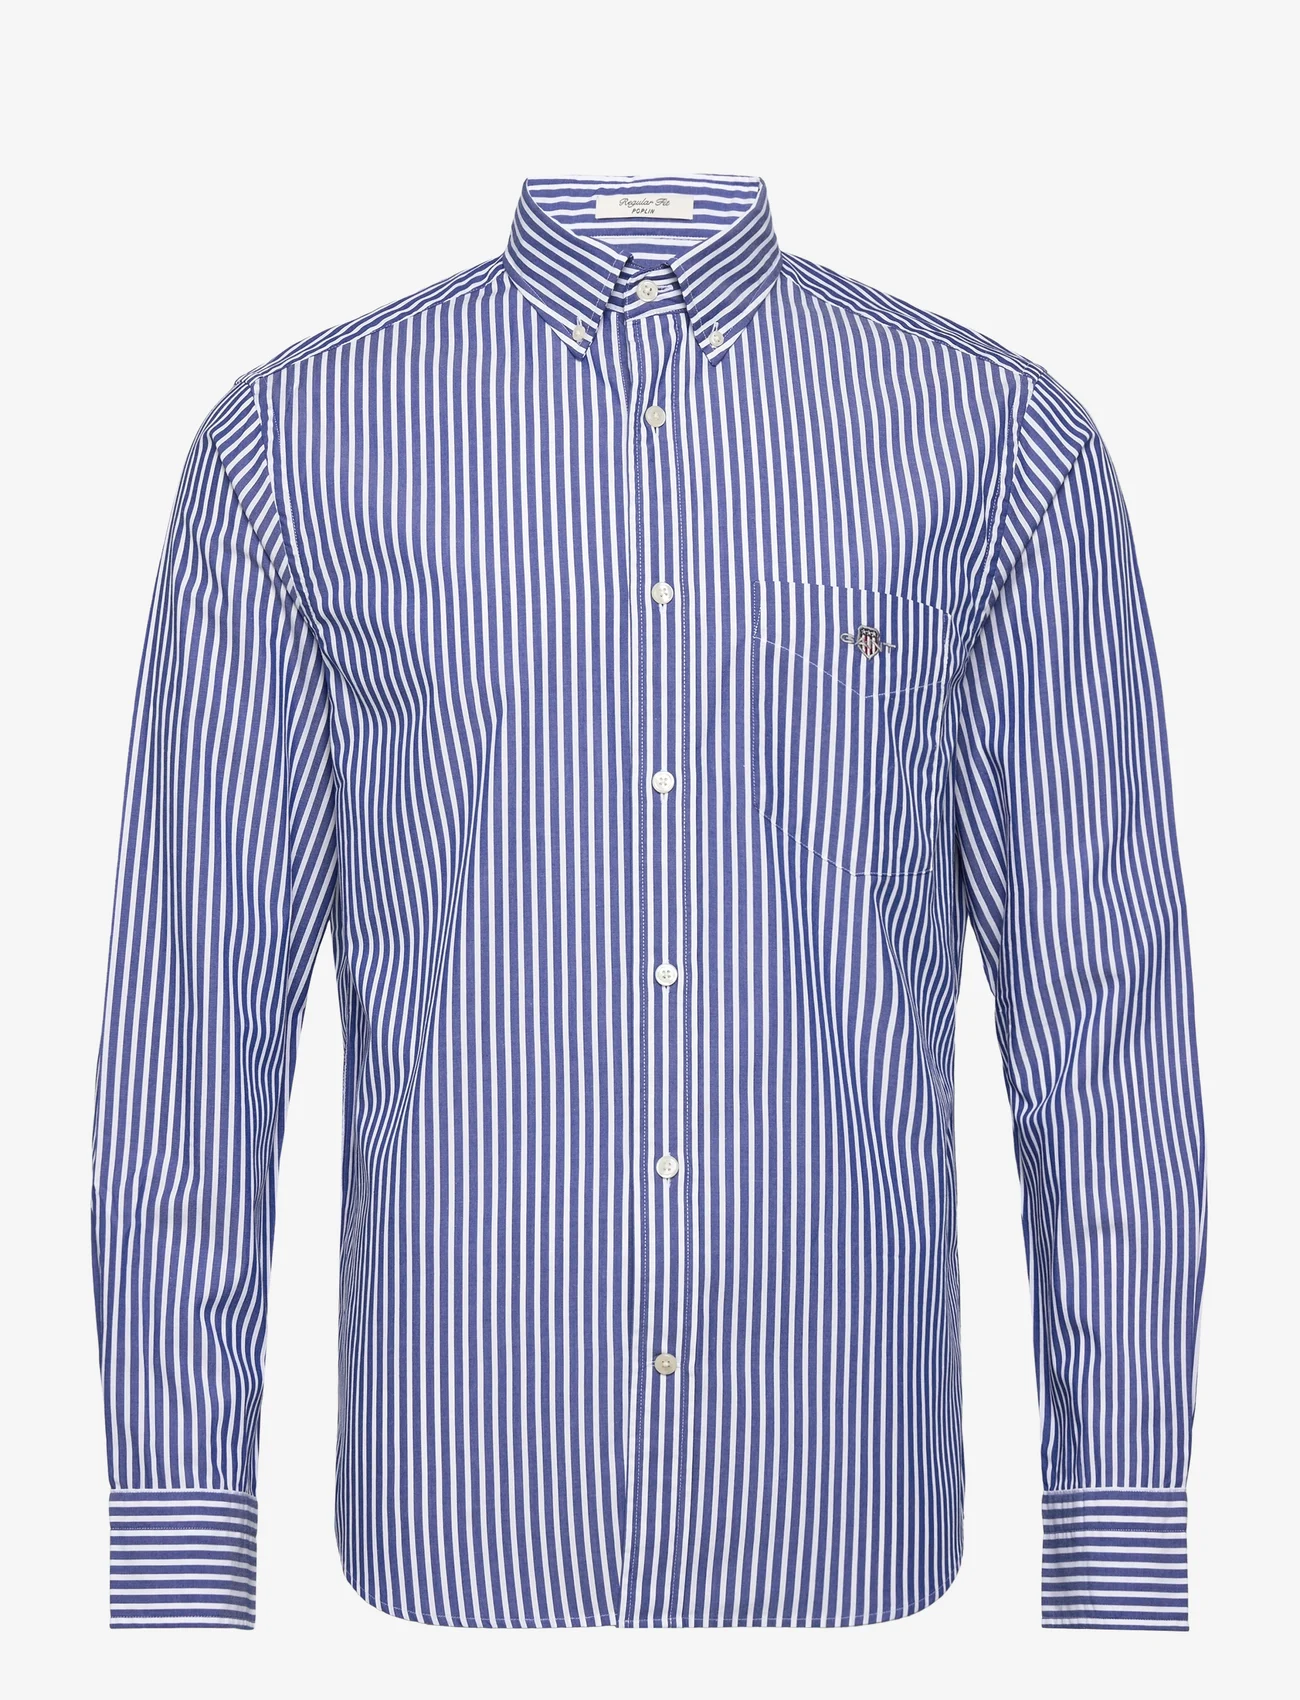 GANT - REG CLASSIC POPLIN STRIPE SHIRT - casual shirts - college blue - 0